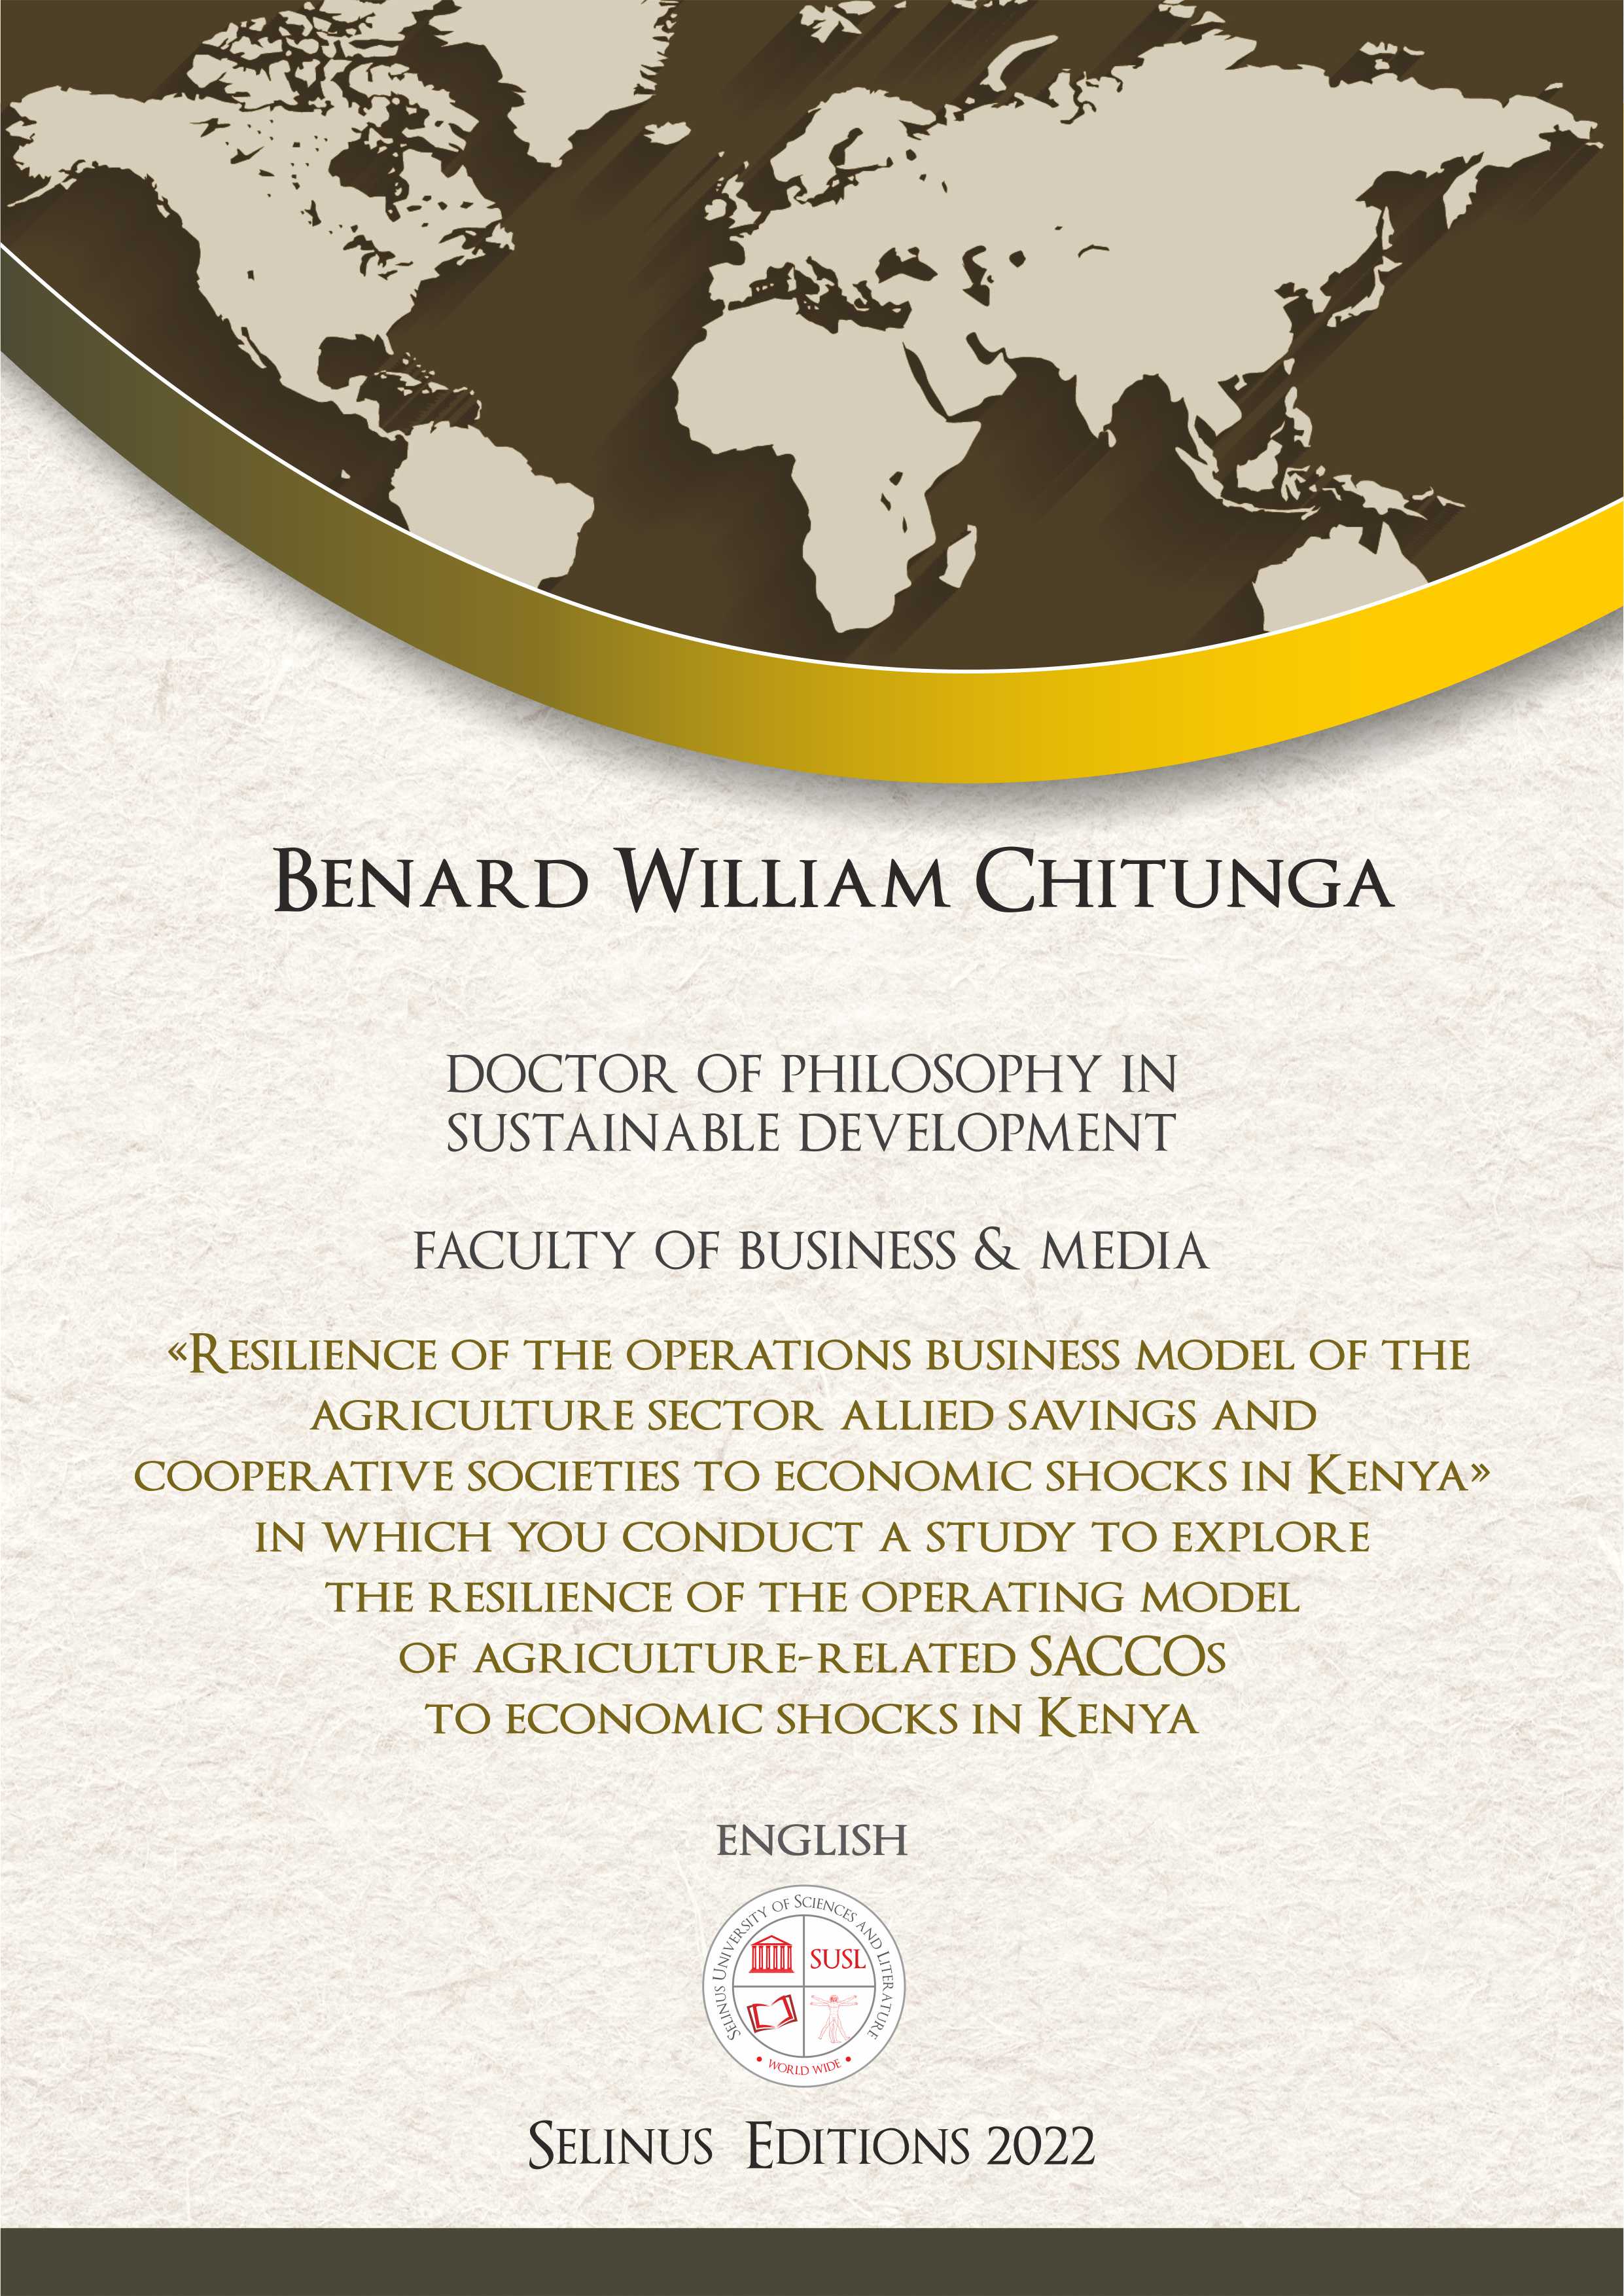 Thesis Benard William Chitunga 